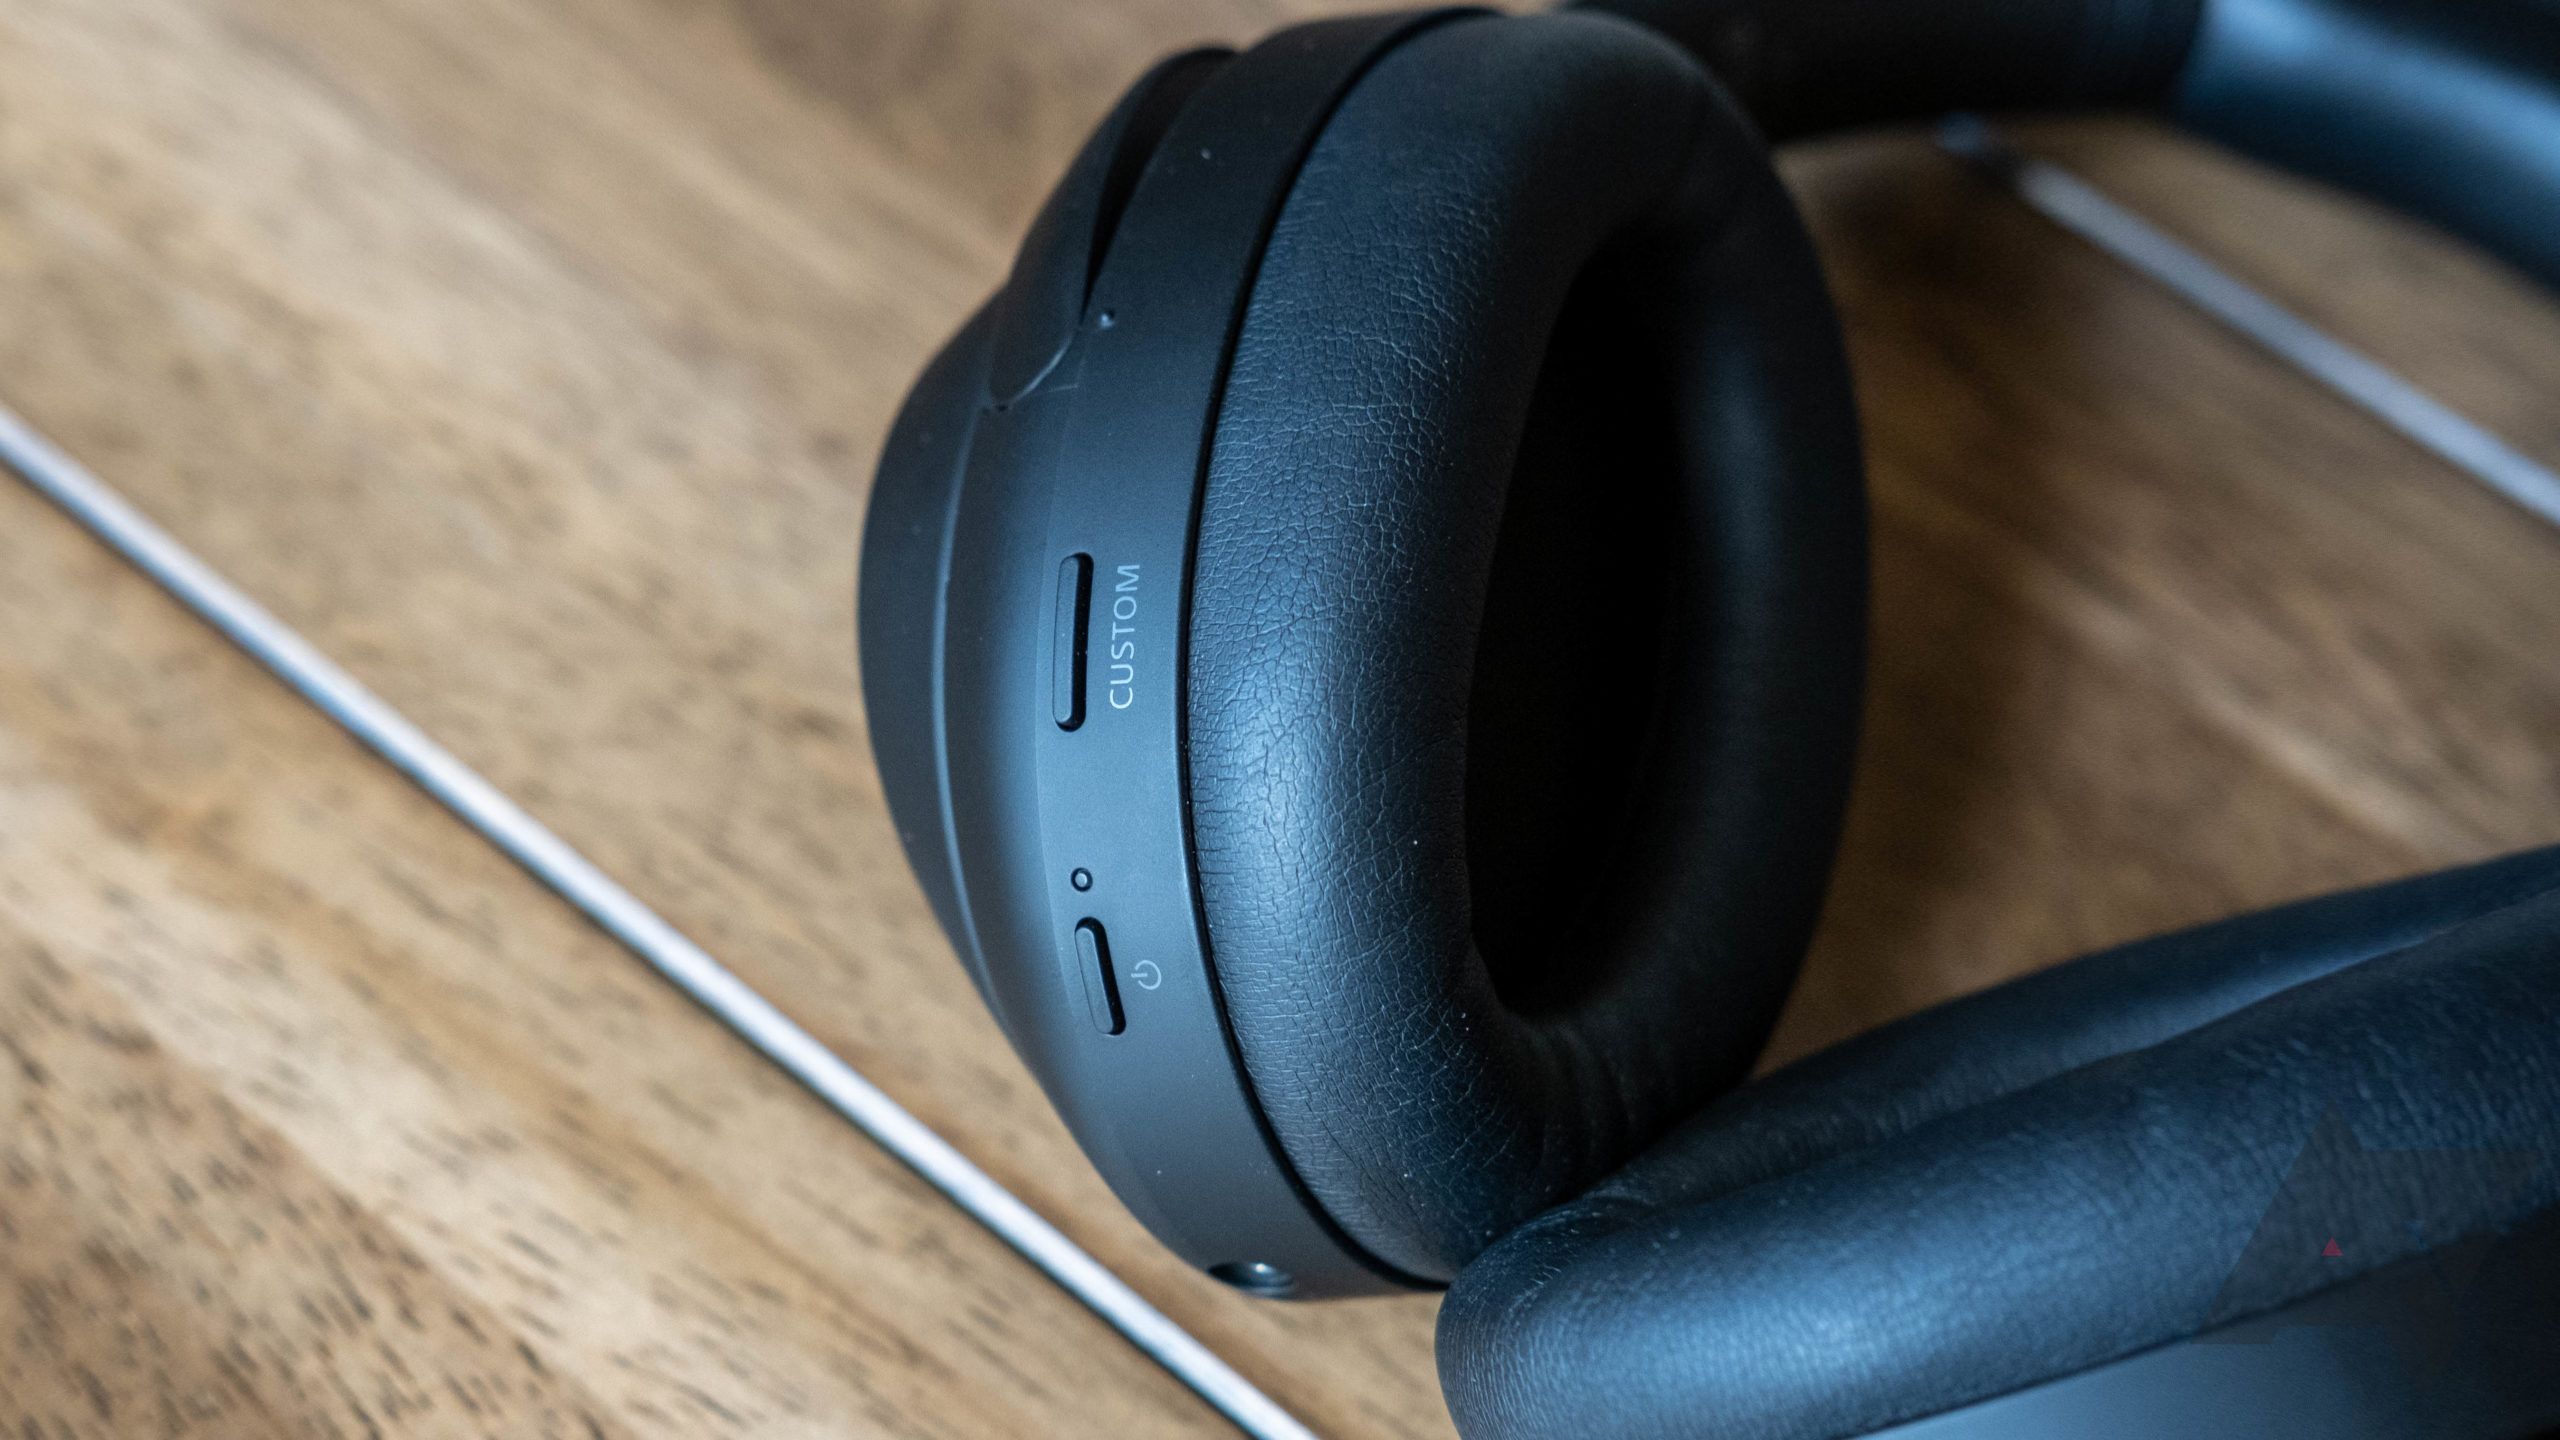 Sony XM4 Wireless Noise Canceling Over-Ear Headphones